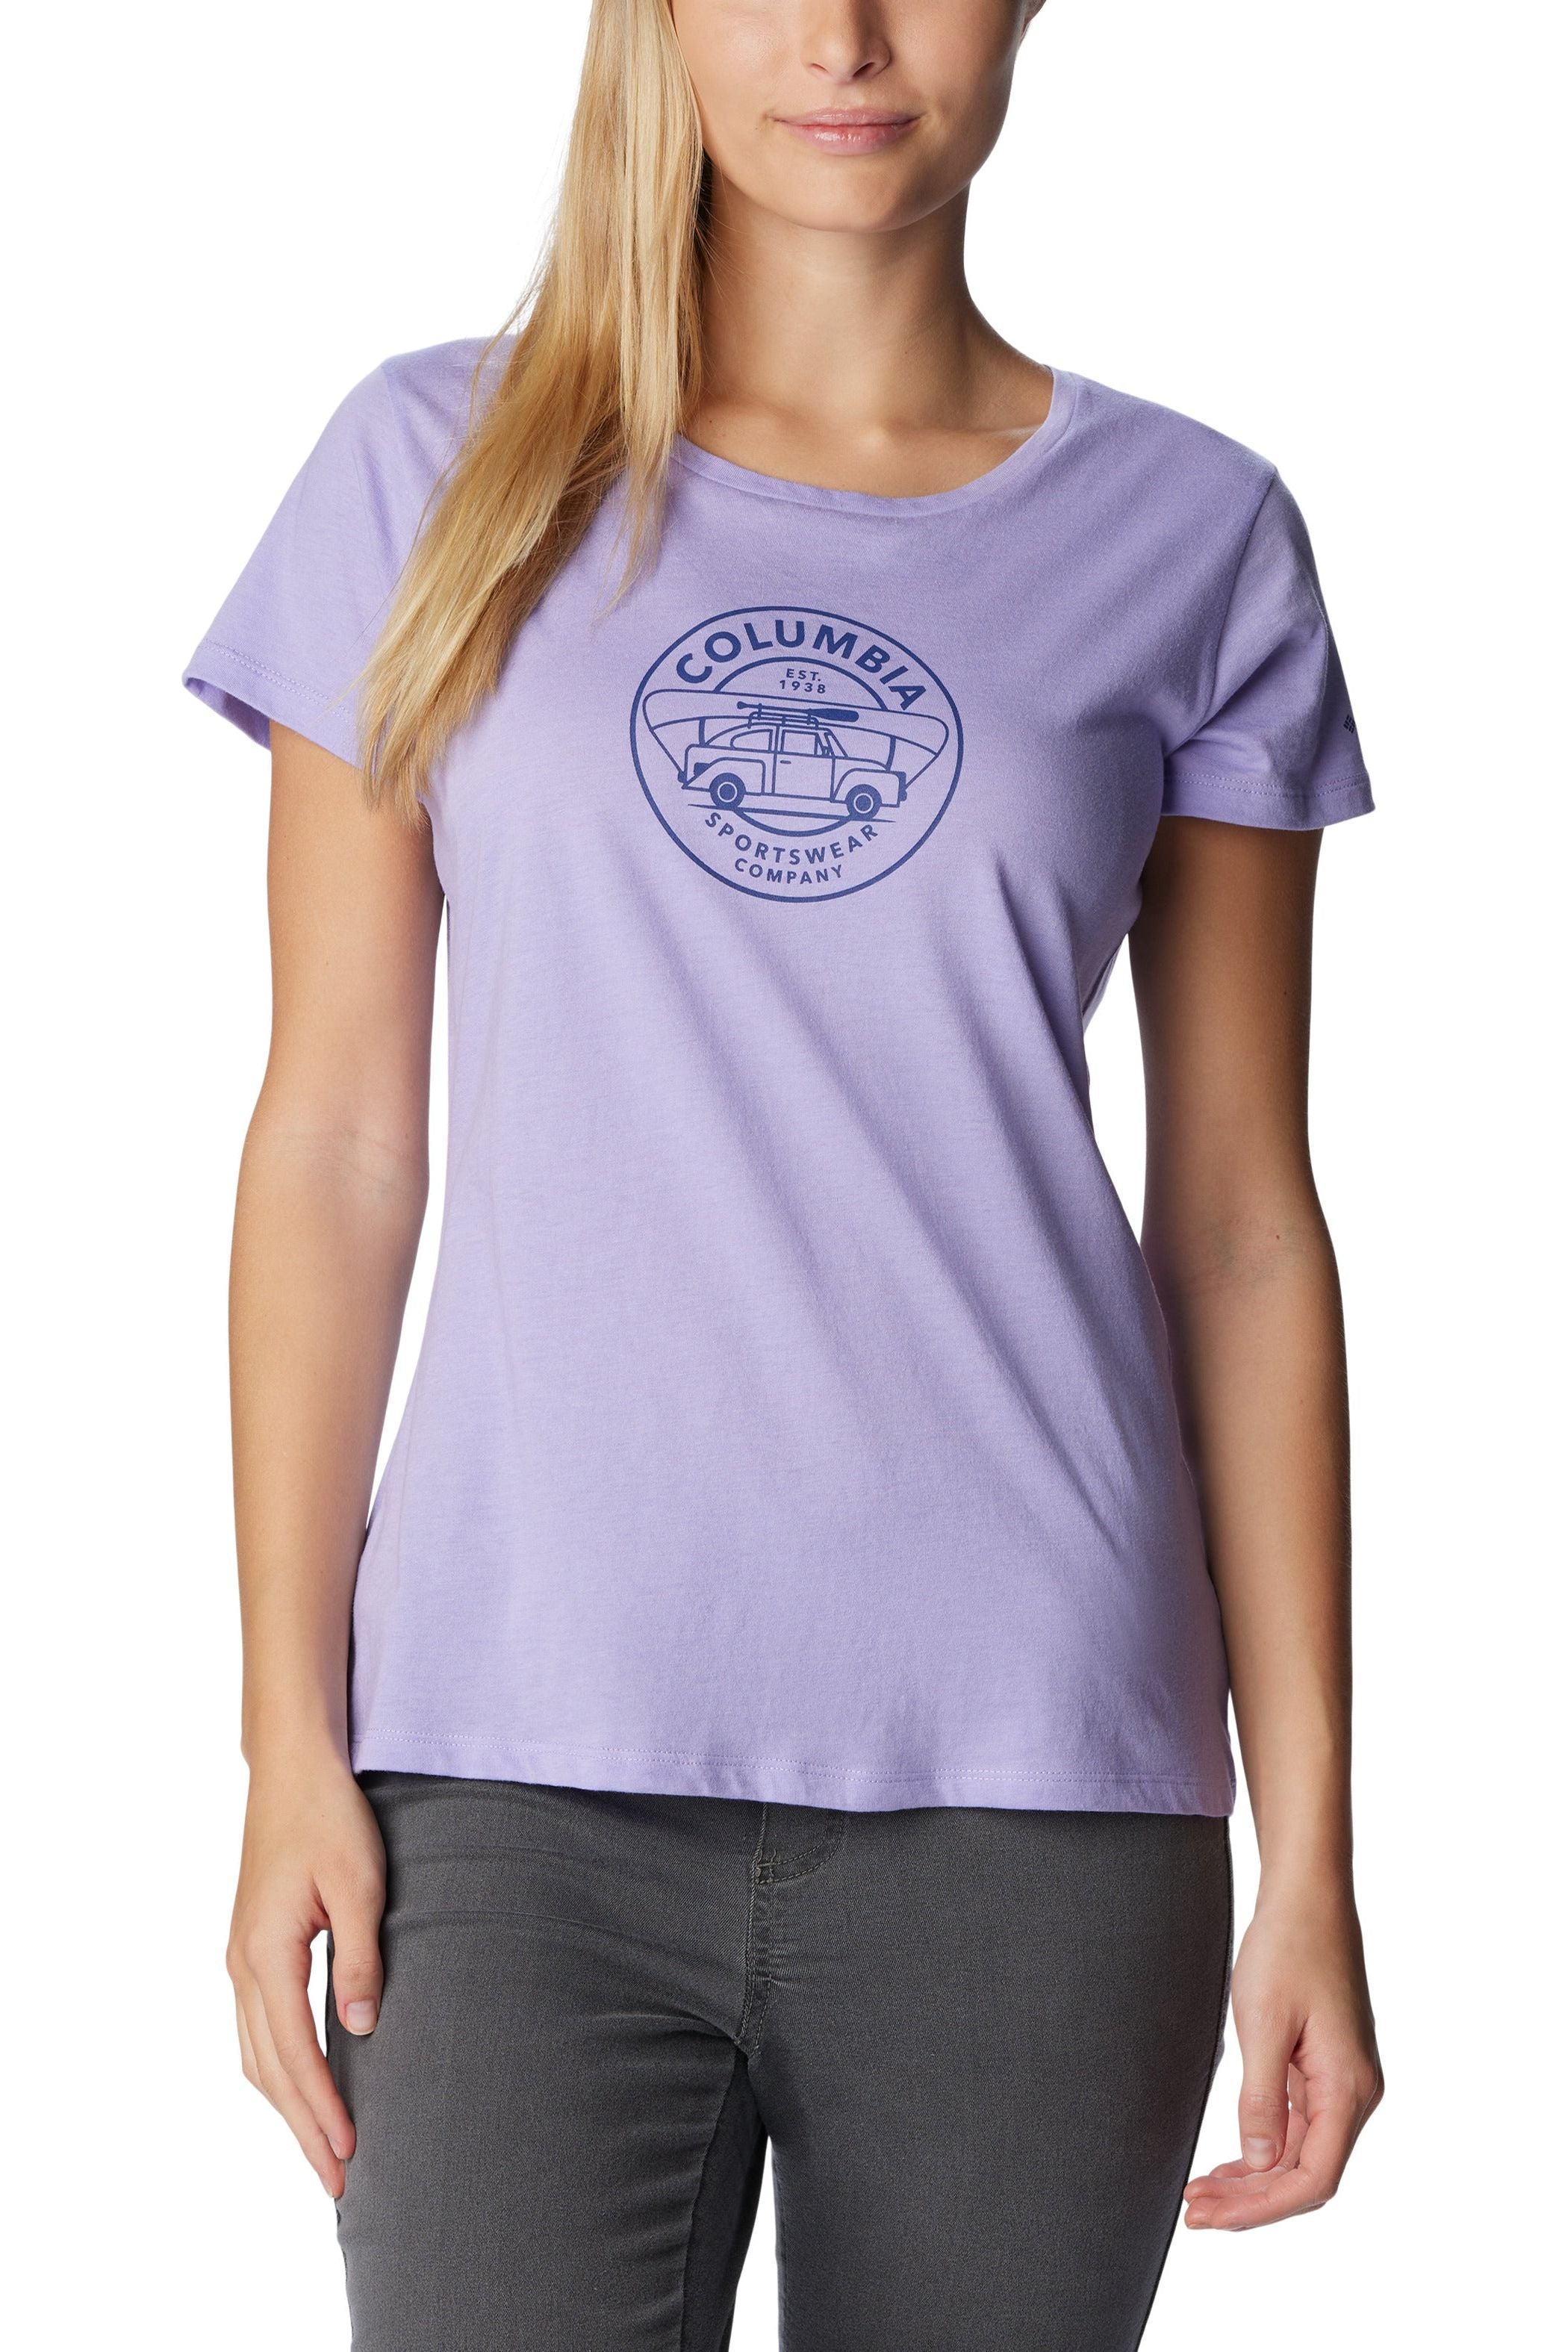 CalTrout's Phish Women's T-Shirt